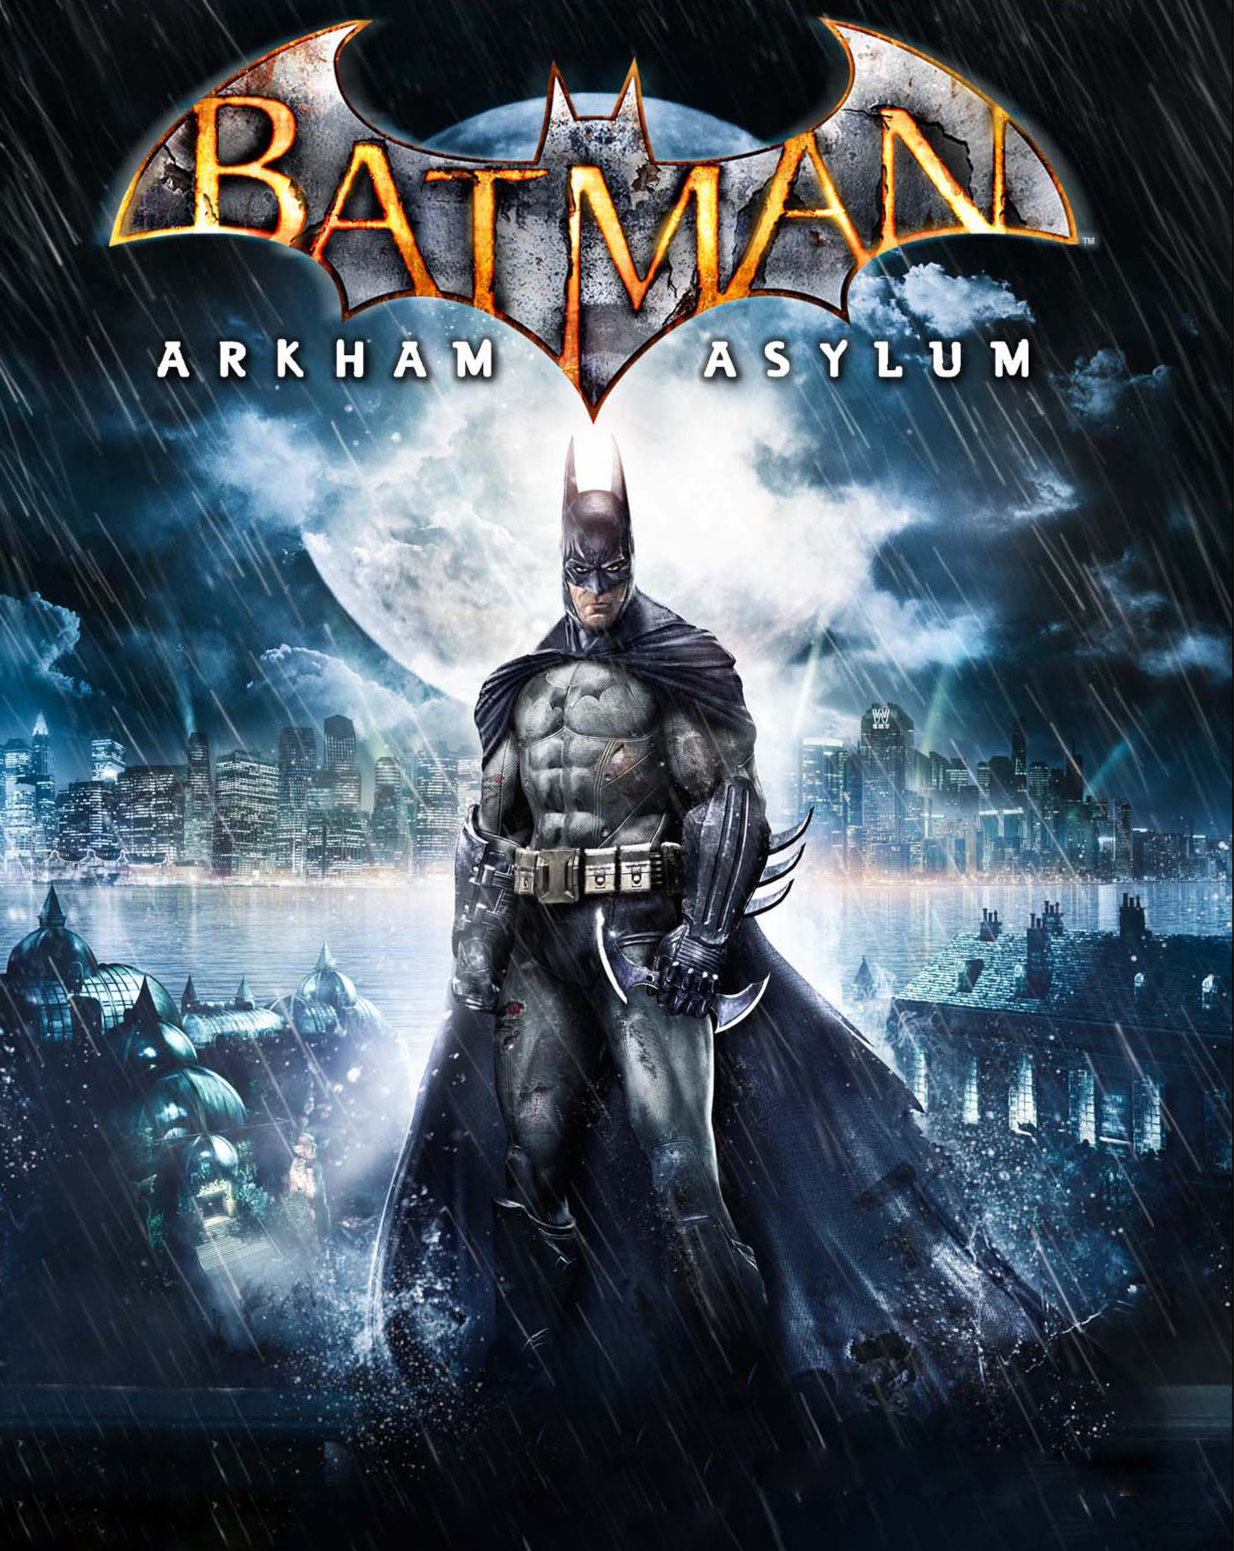 batman arkham asylum game of the year edition